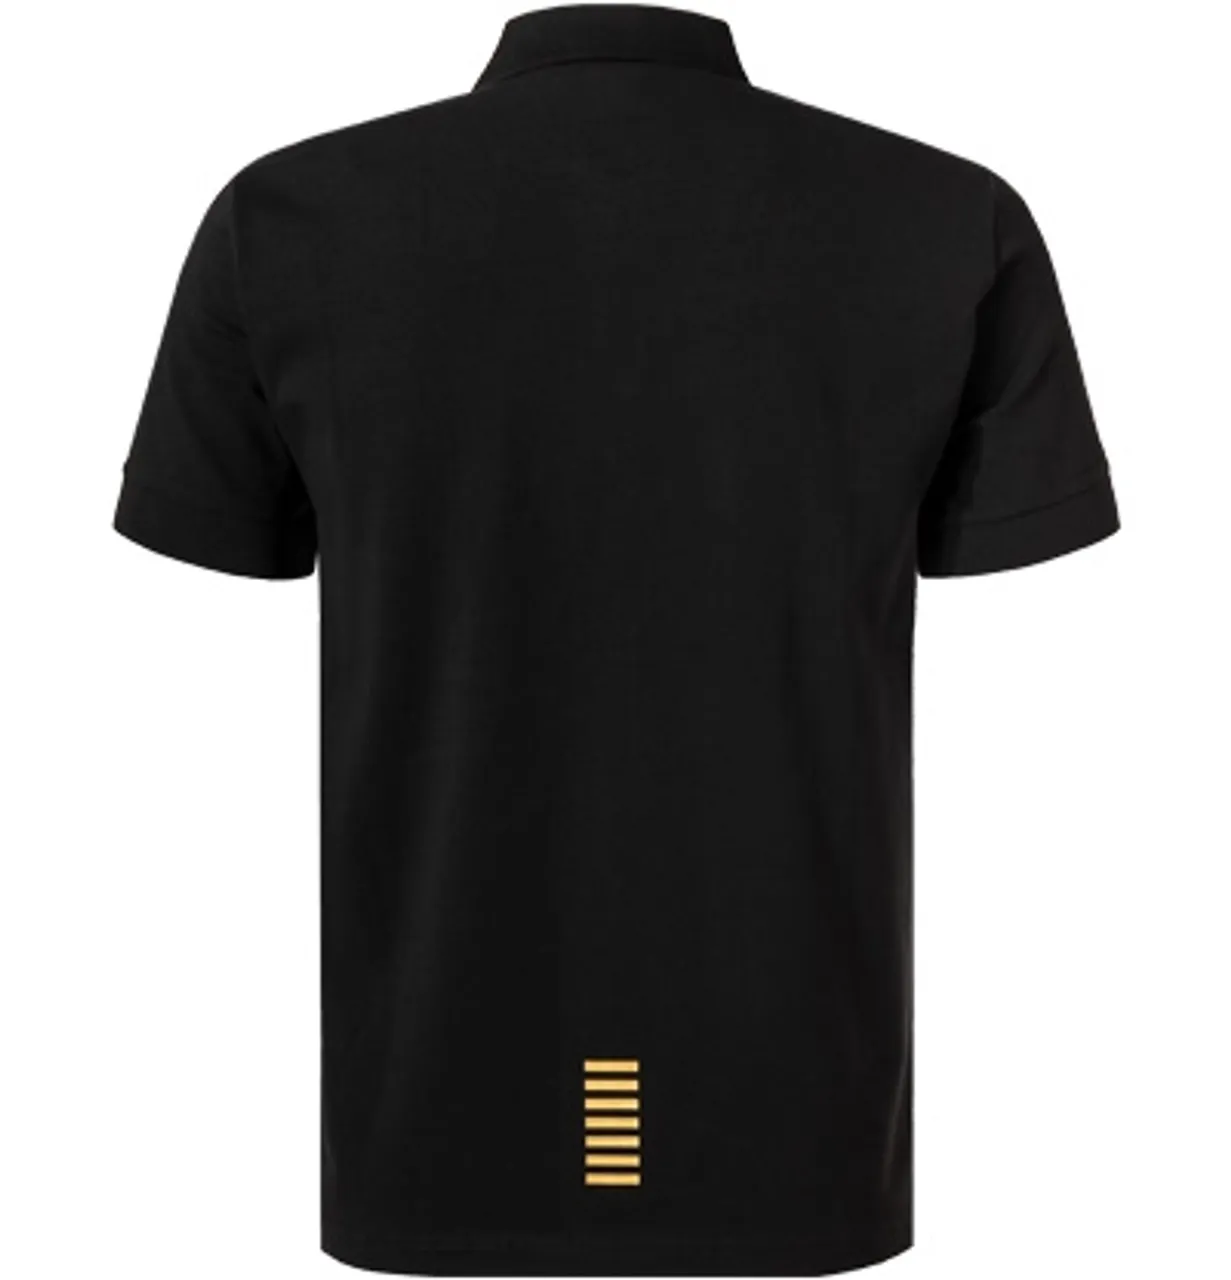 EA7 Herren Polo-Shirt schwarz Baumwoll-Jersey